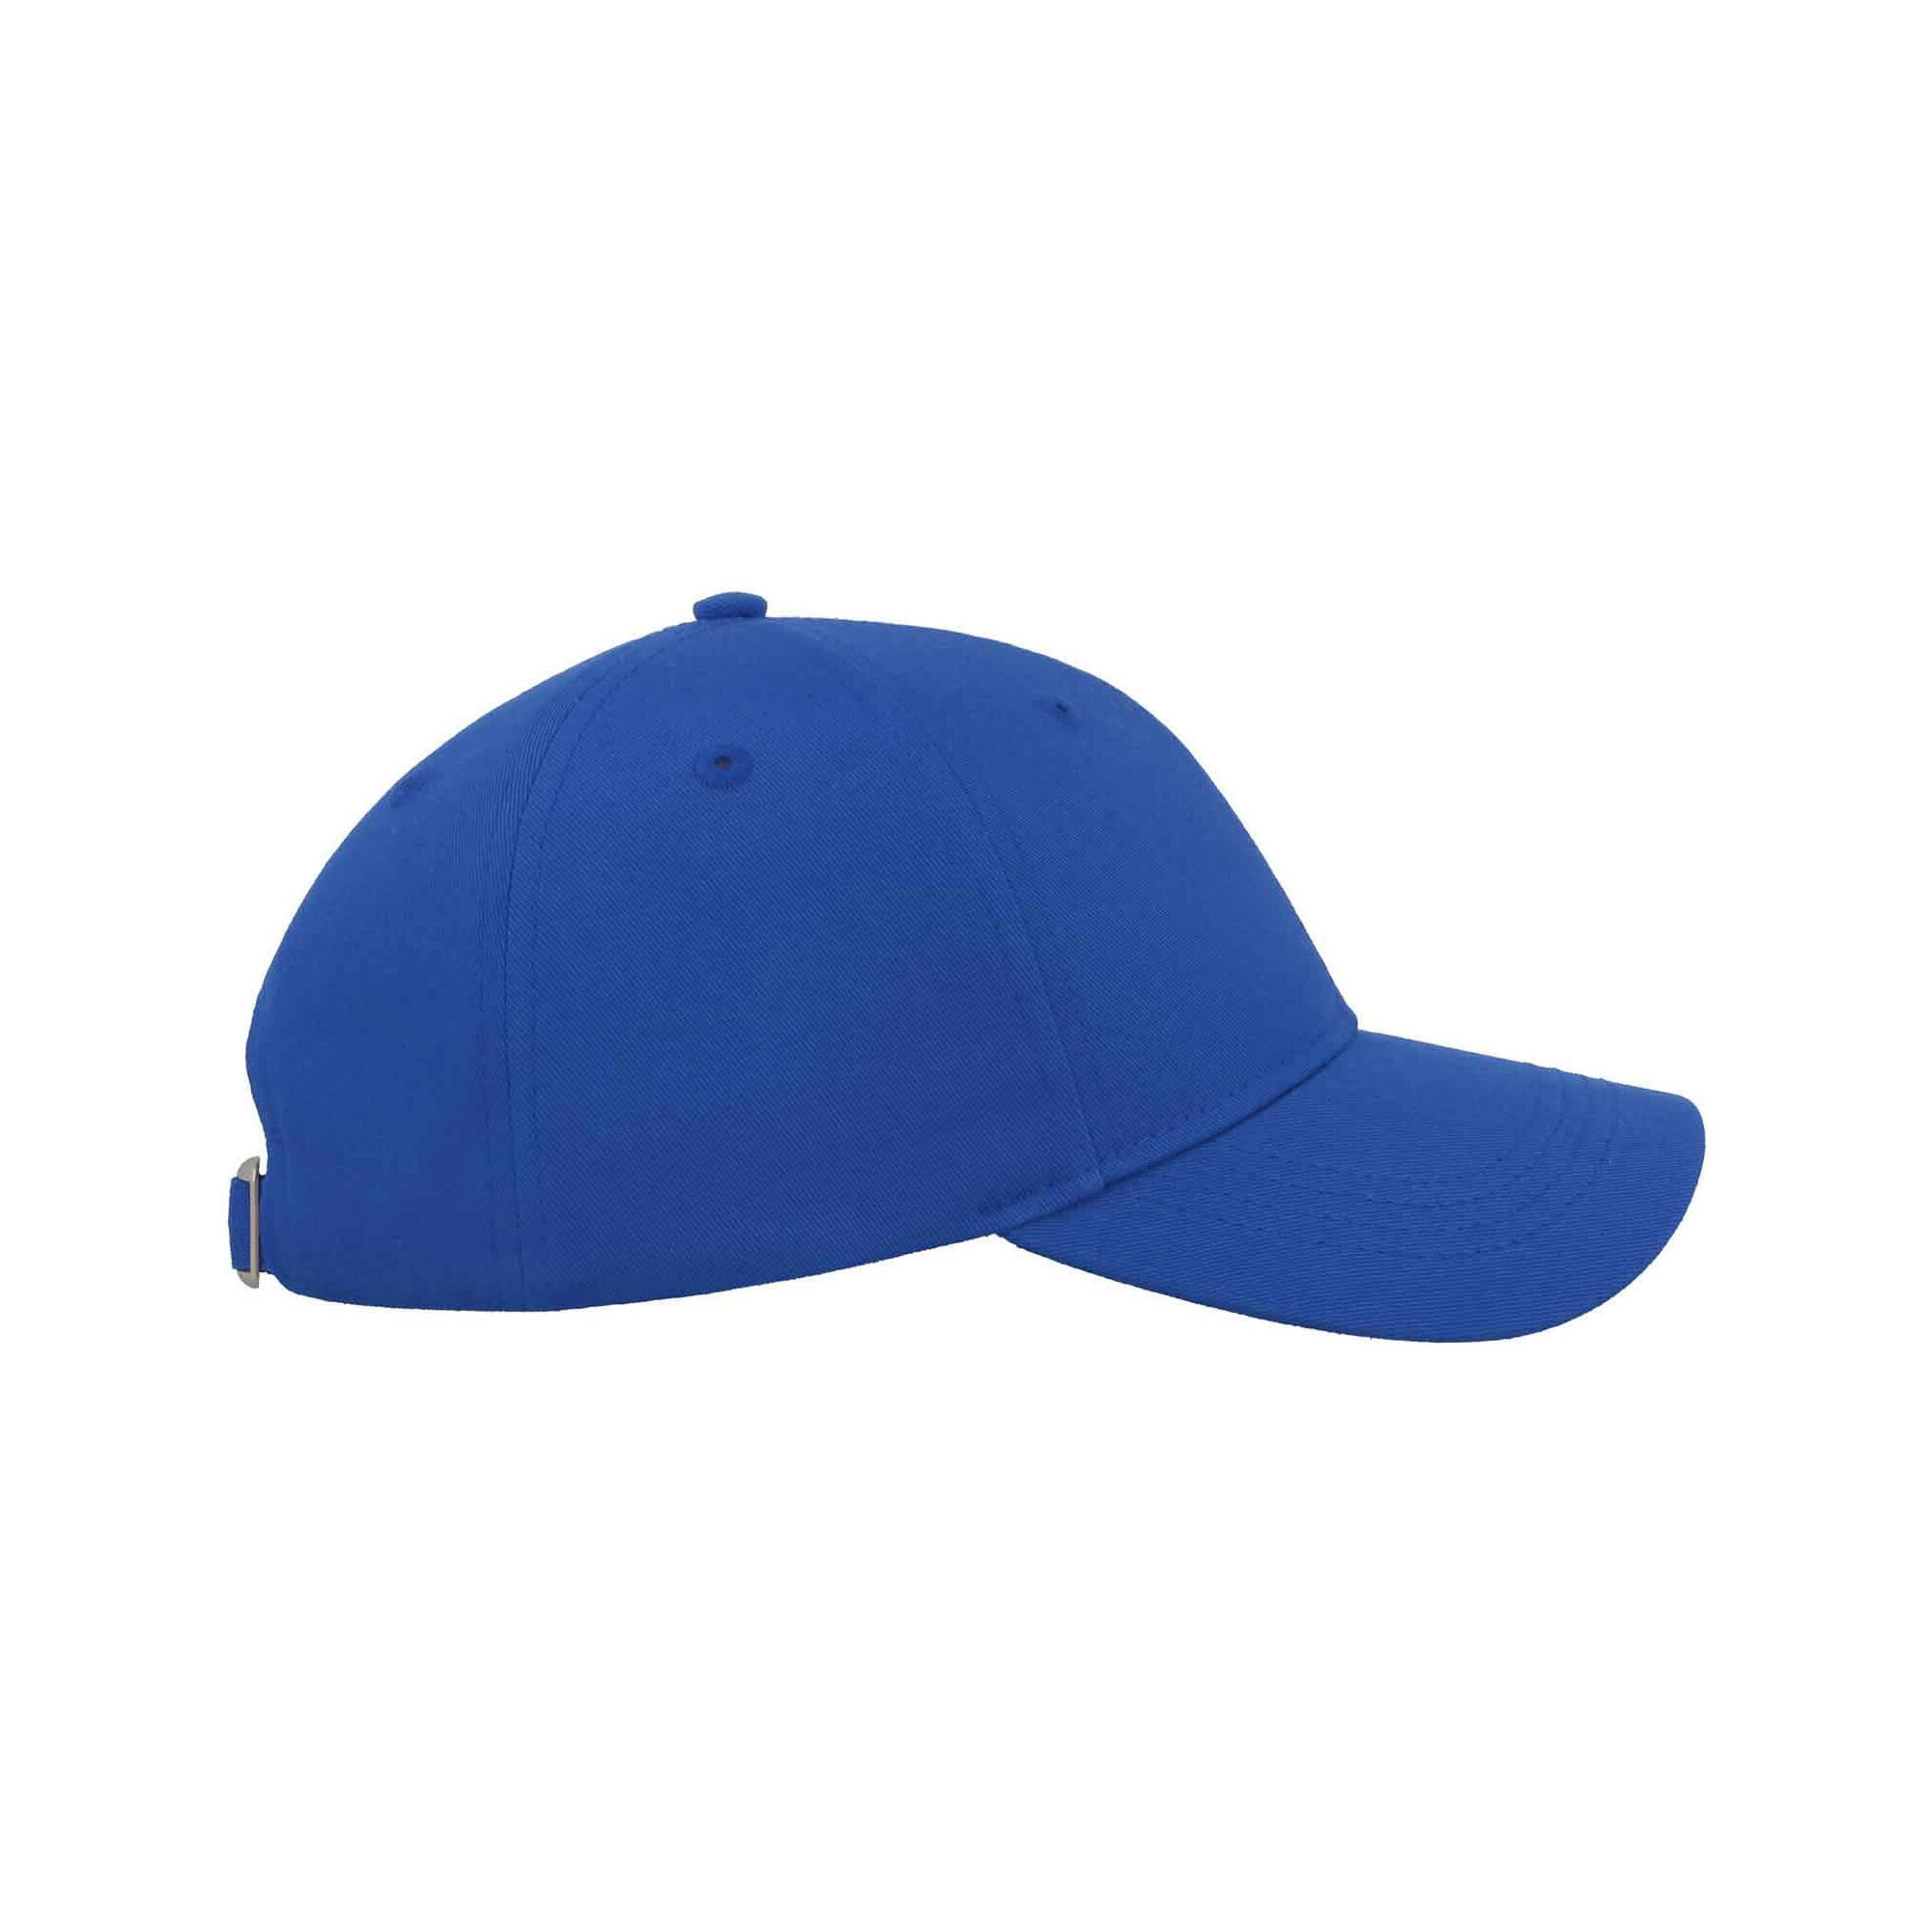 Unisex Adult Curved Twill Baseball Cap (Royal Blue) 3/3